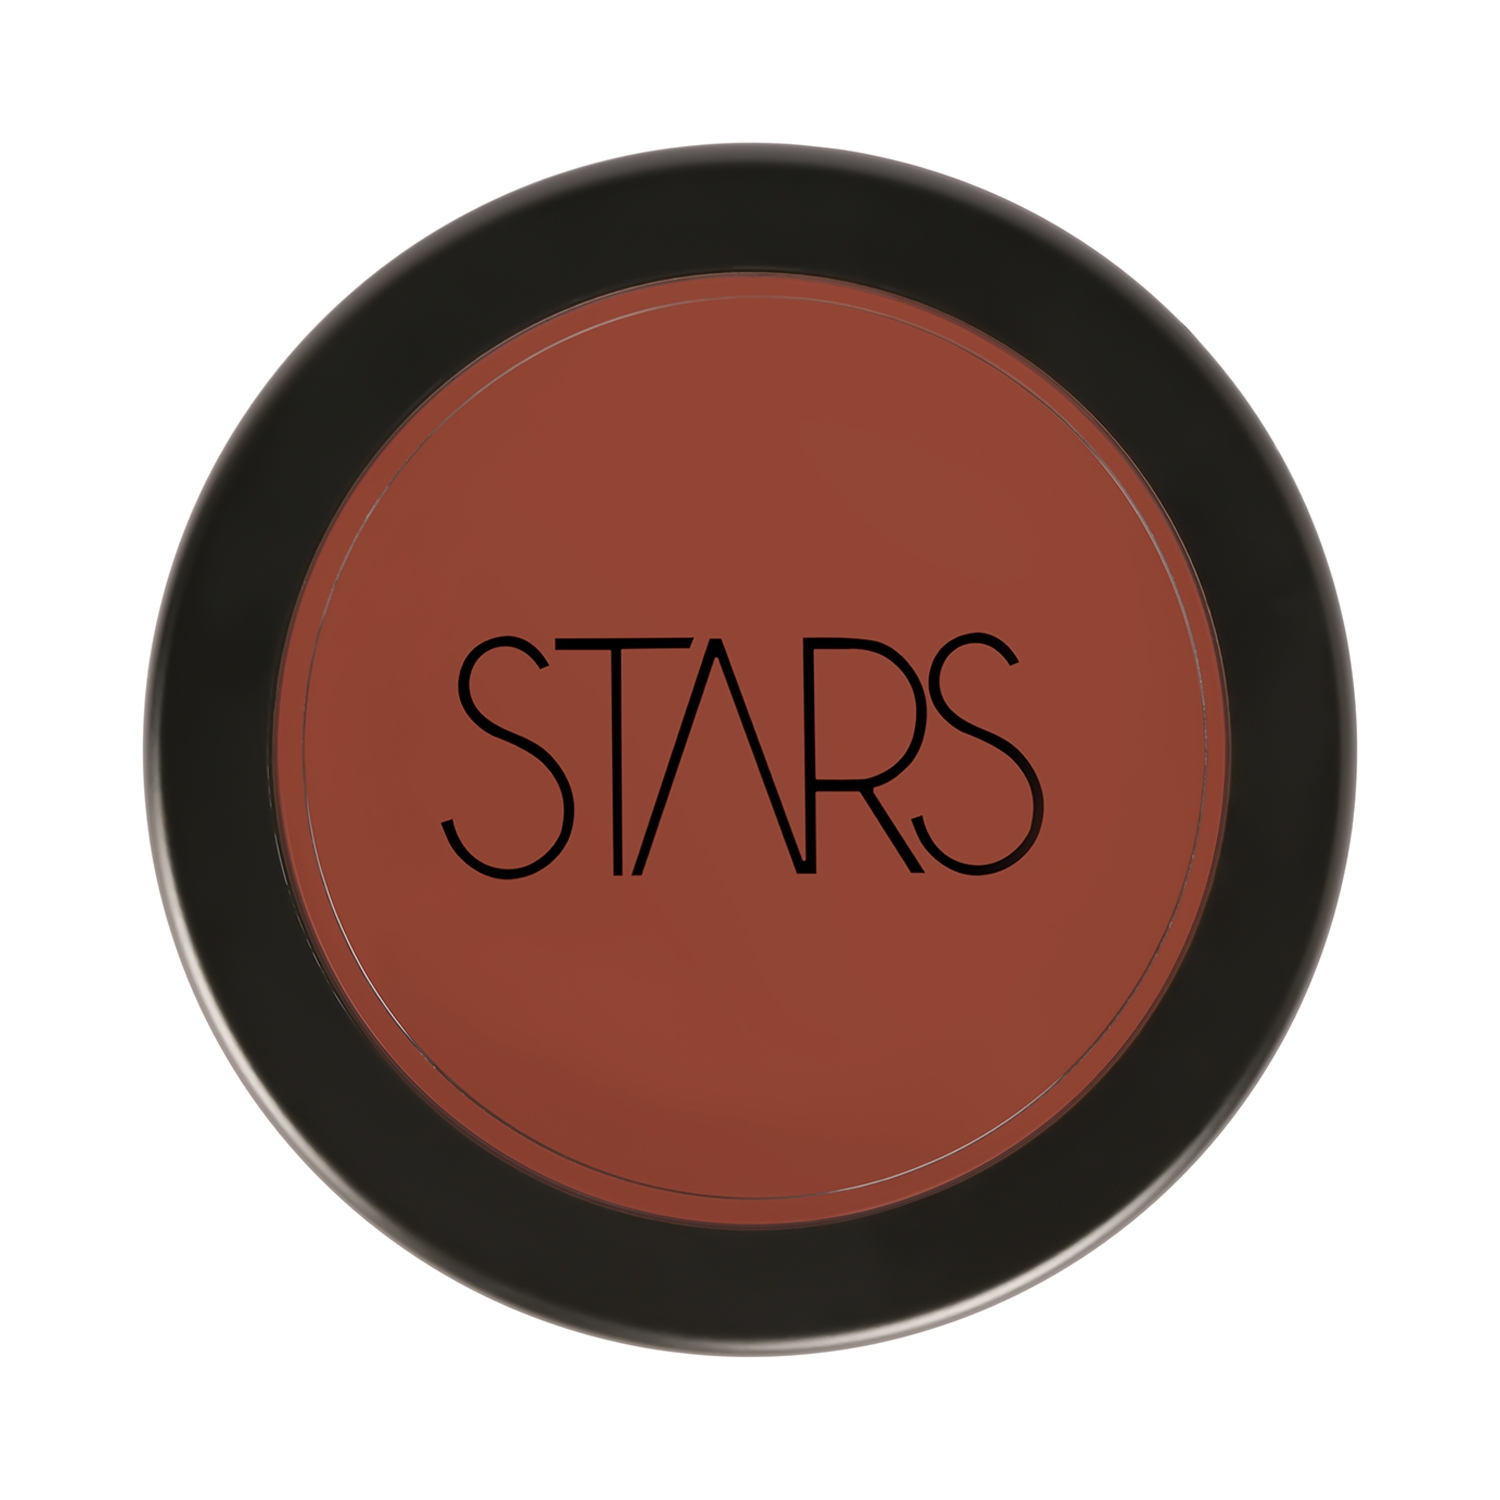 Stars Cosmetics | Stars Cosmetics Face Make Up Foundation - Chic Rounge (8g)